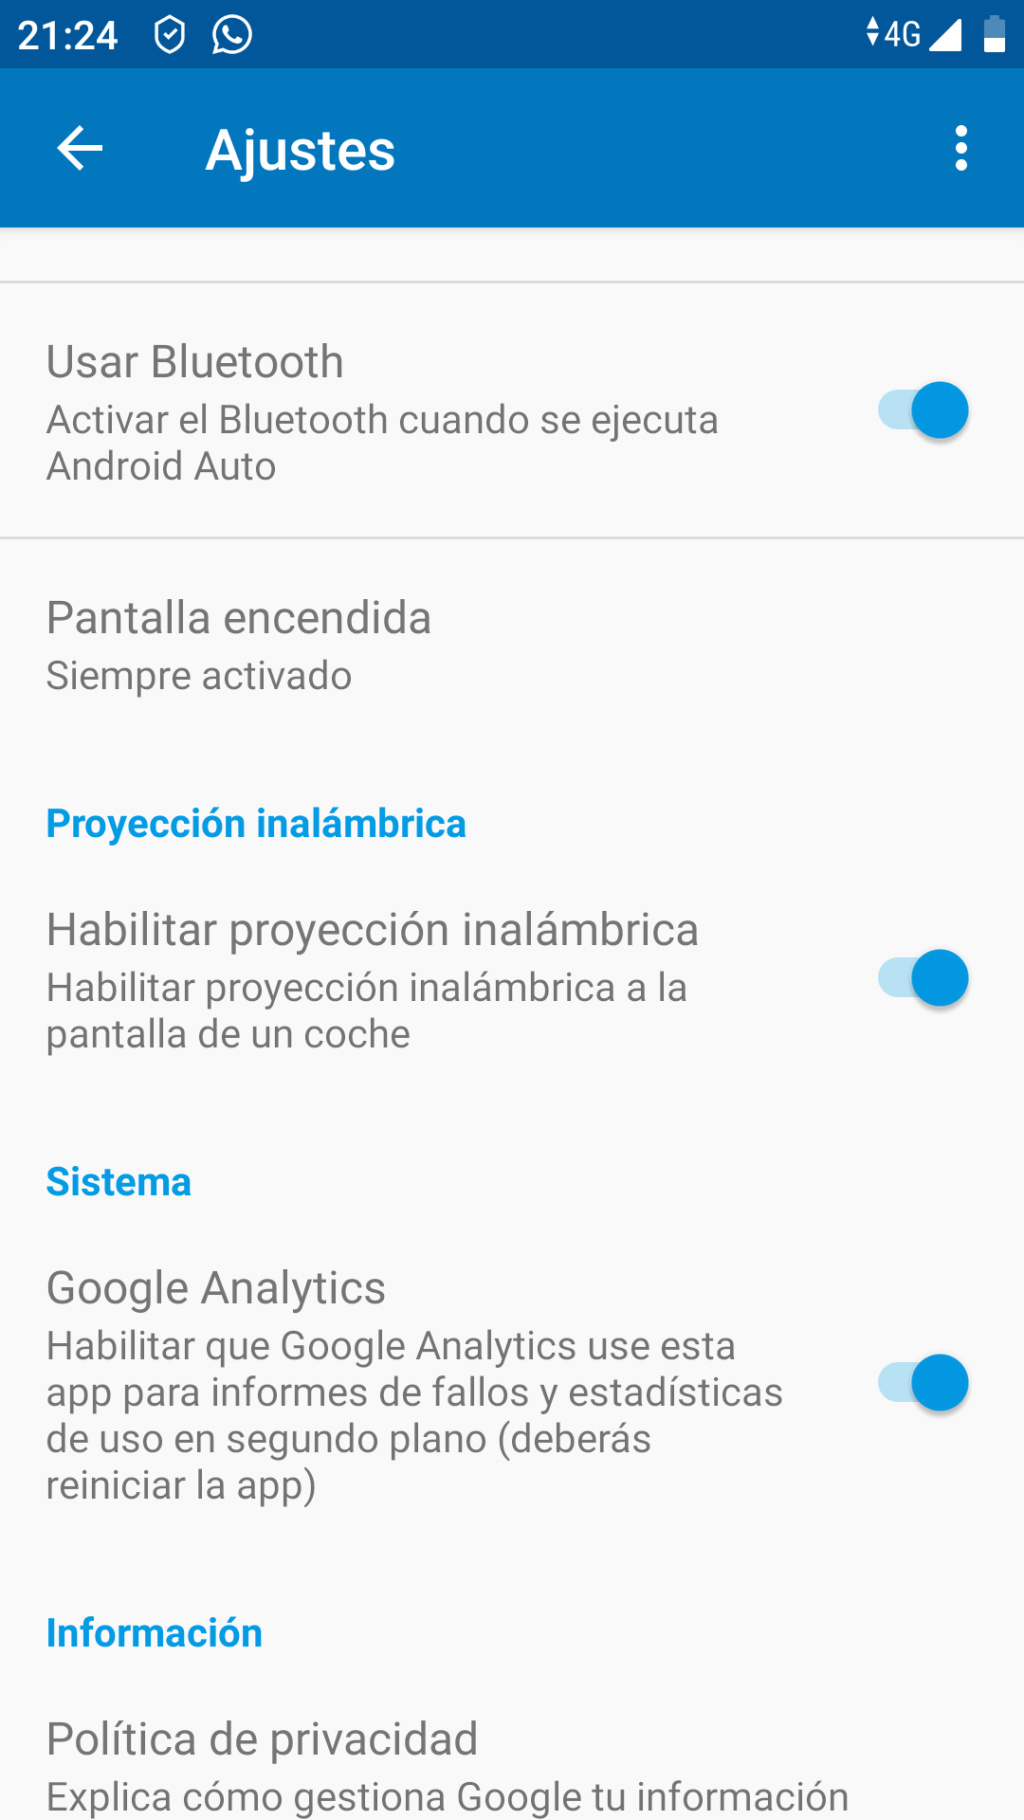 Android Auto inalambrico - Página 2 Screen11